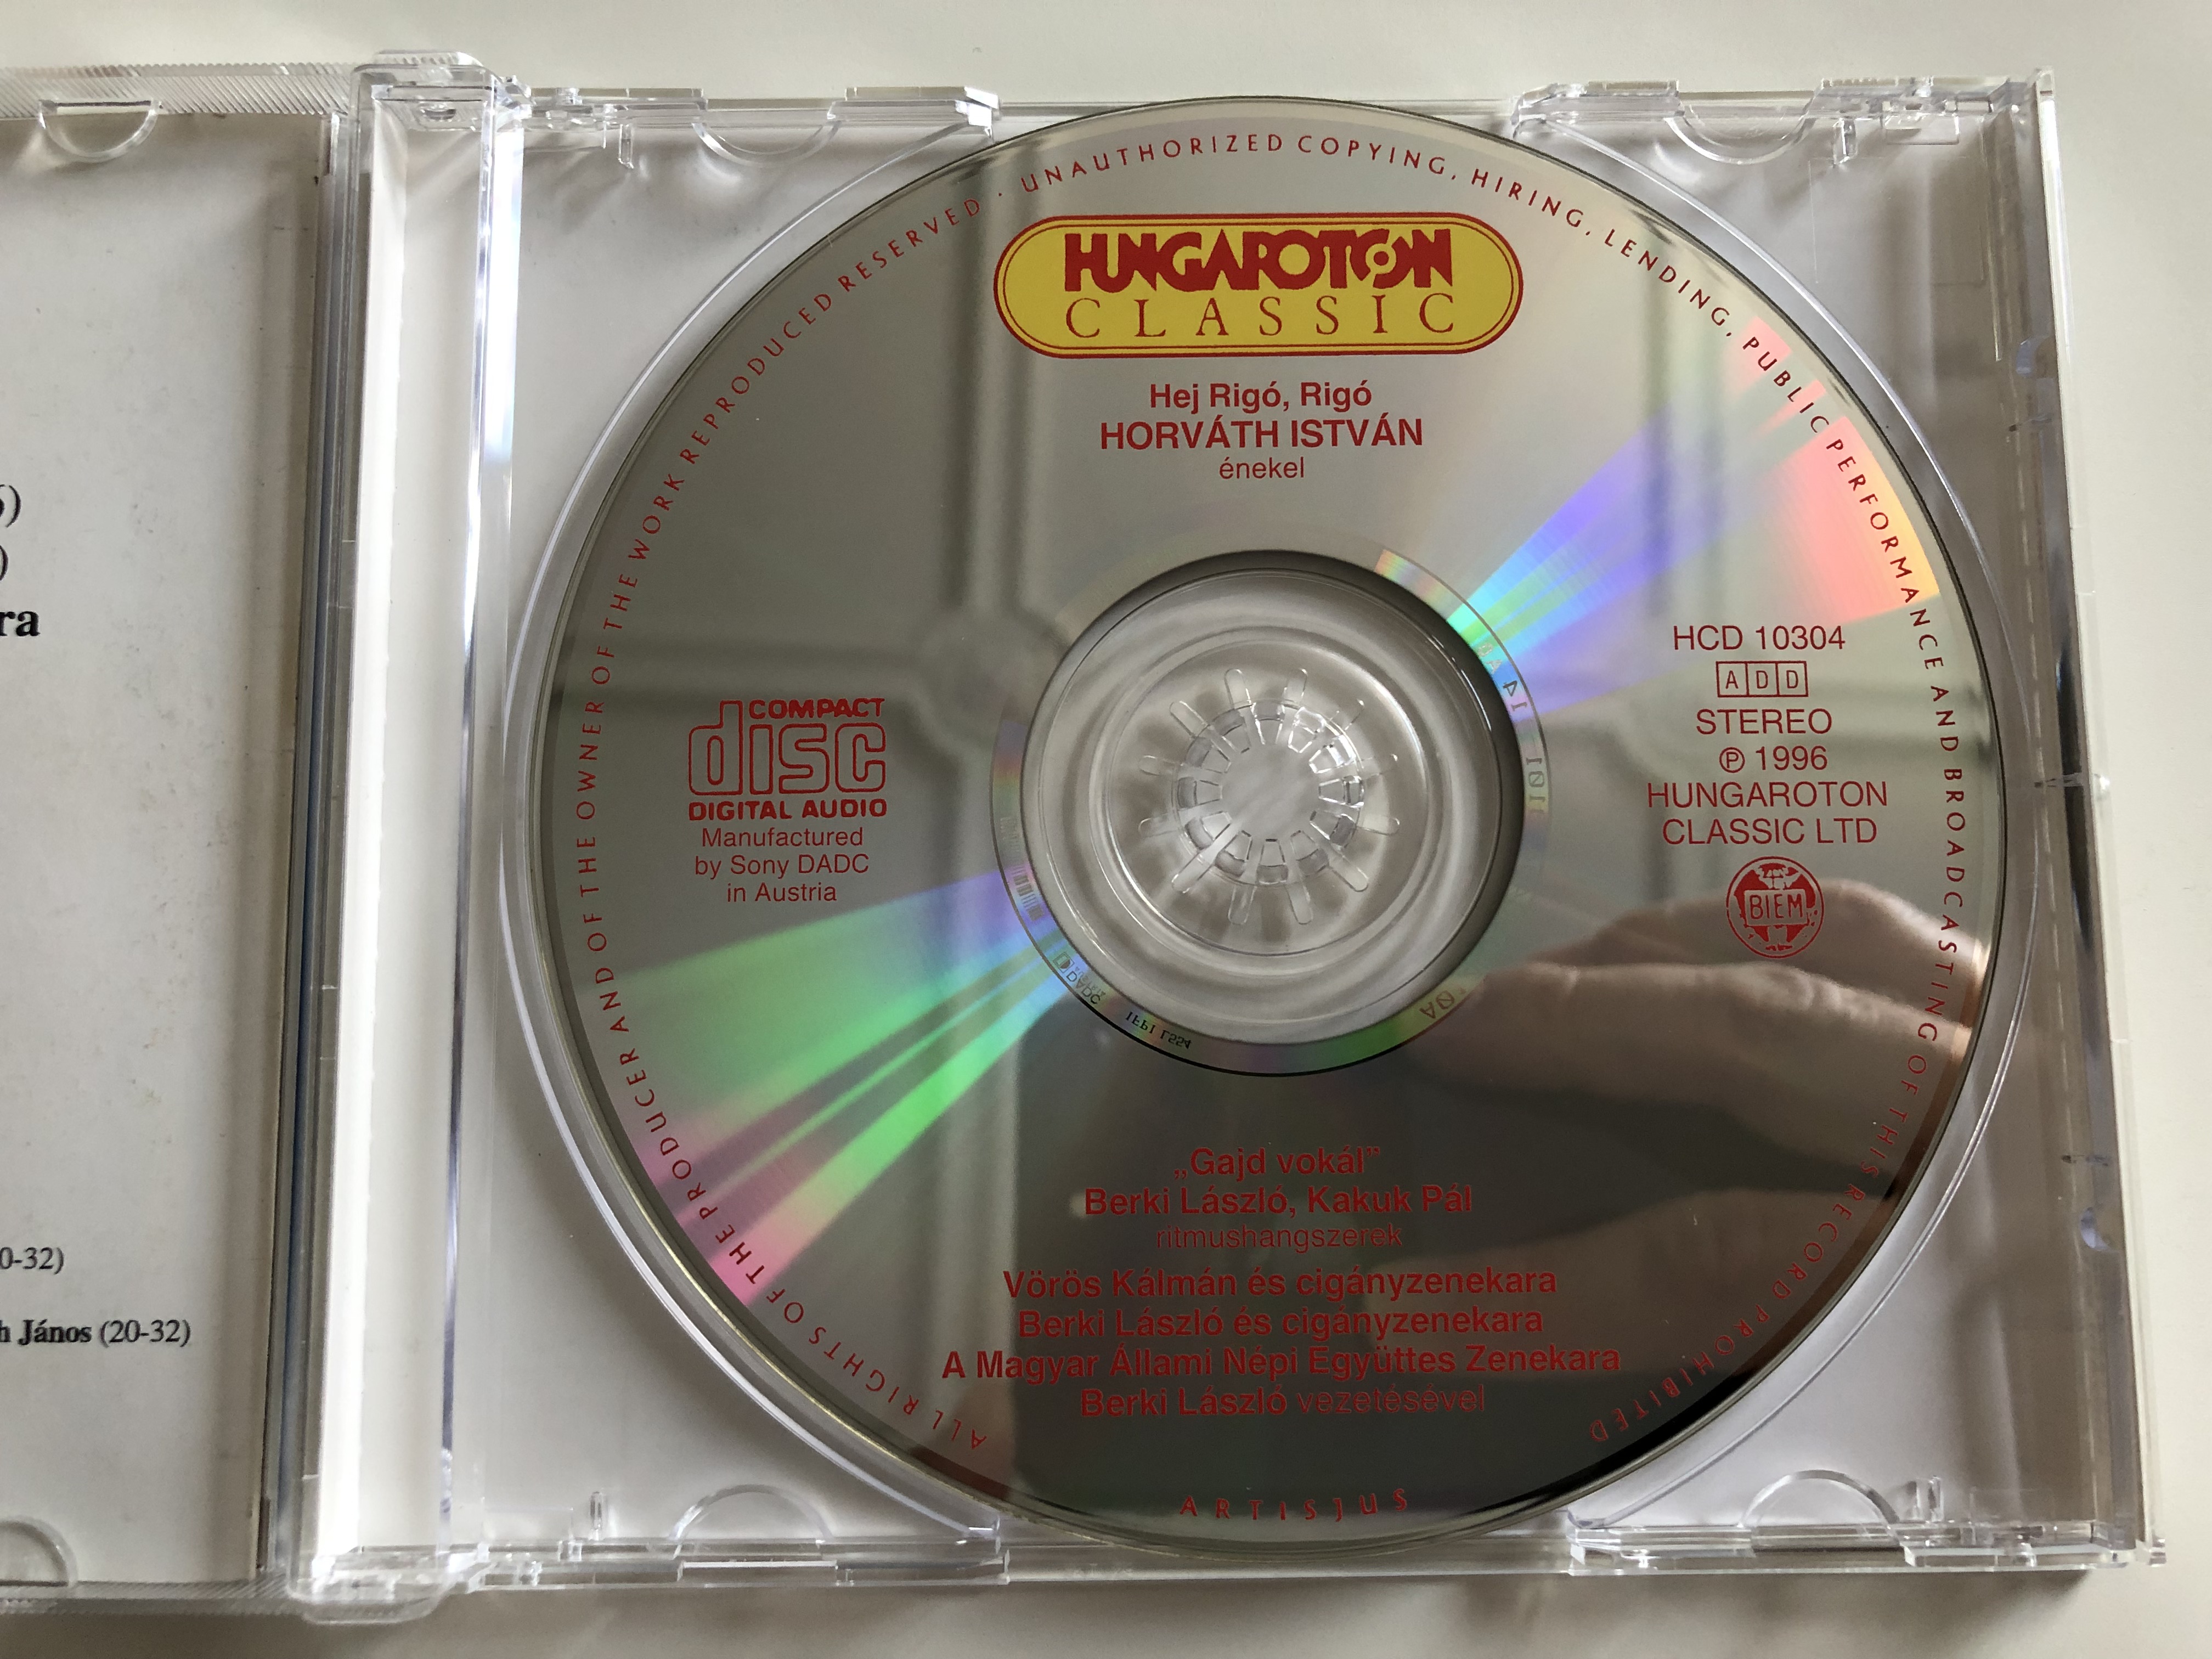 horv-th-istv-n-hej-rig-rig-hopp-te-zsiga-elmentem-n-az-erd-be-elment-a-cili-n-ni-hungaroton-classic-audio-cd-1996-hcd-10304-6-.jpg